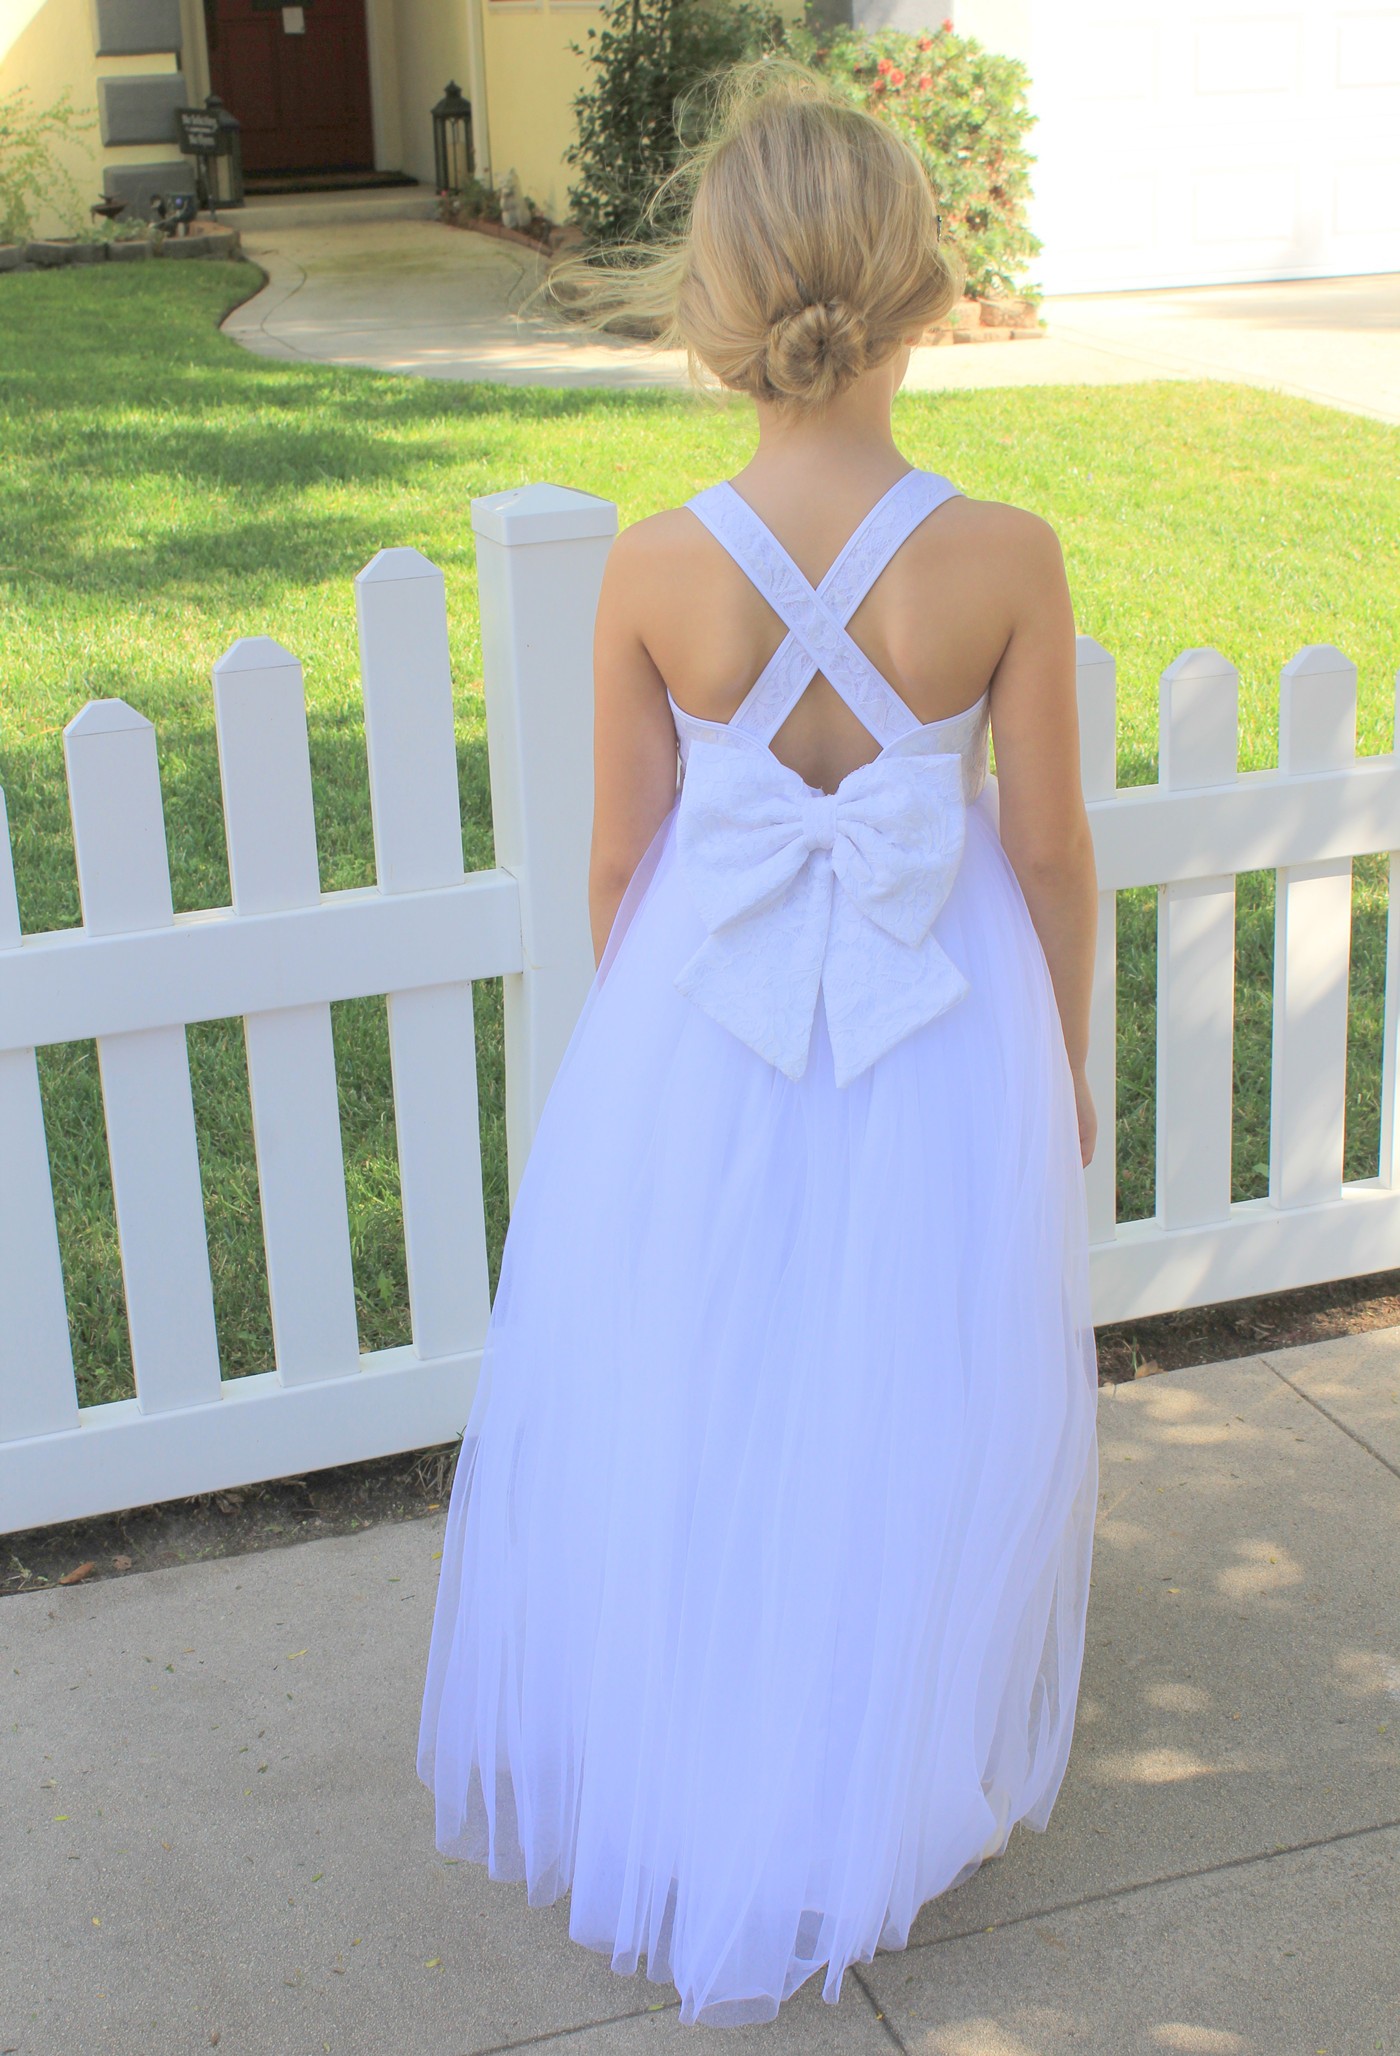  White Crossed Straps Lace Flower Girl Dress 204